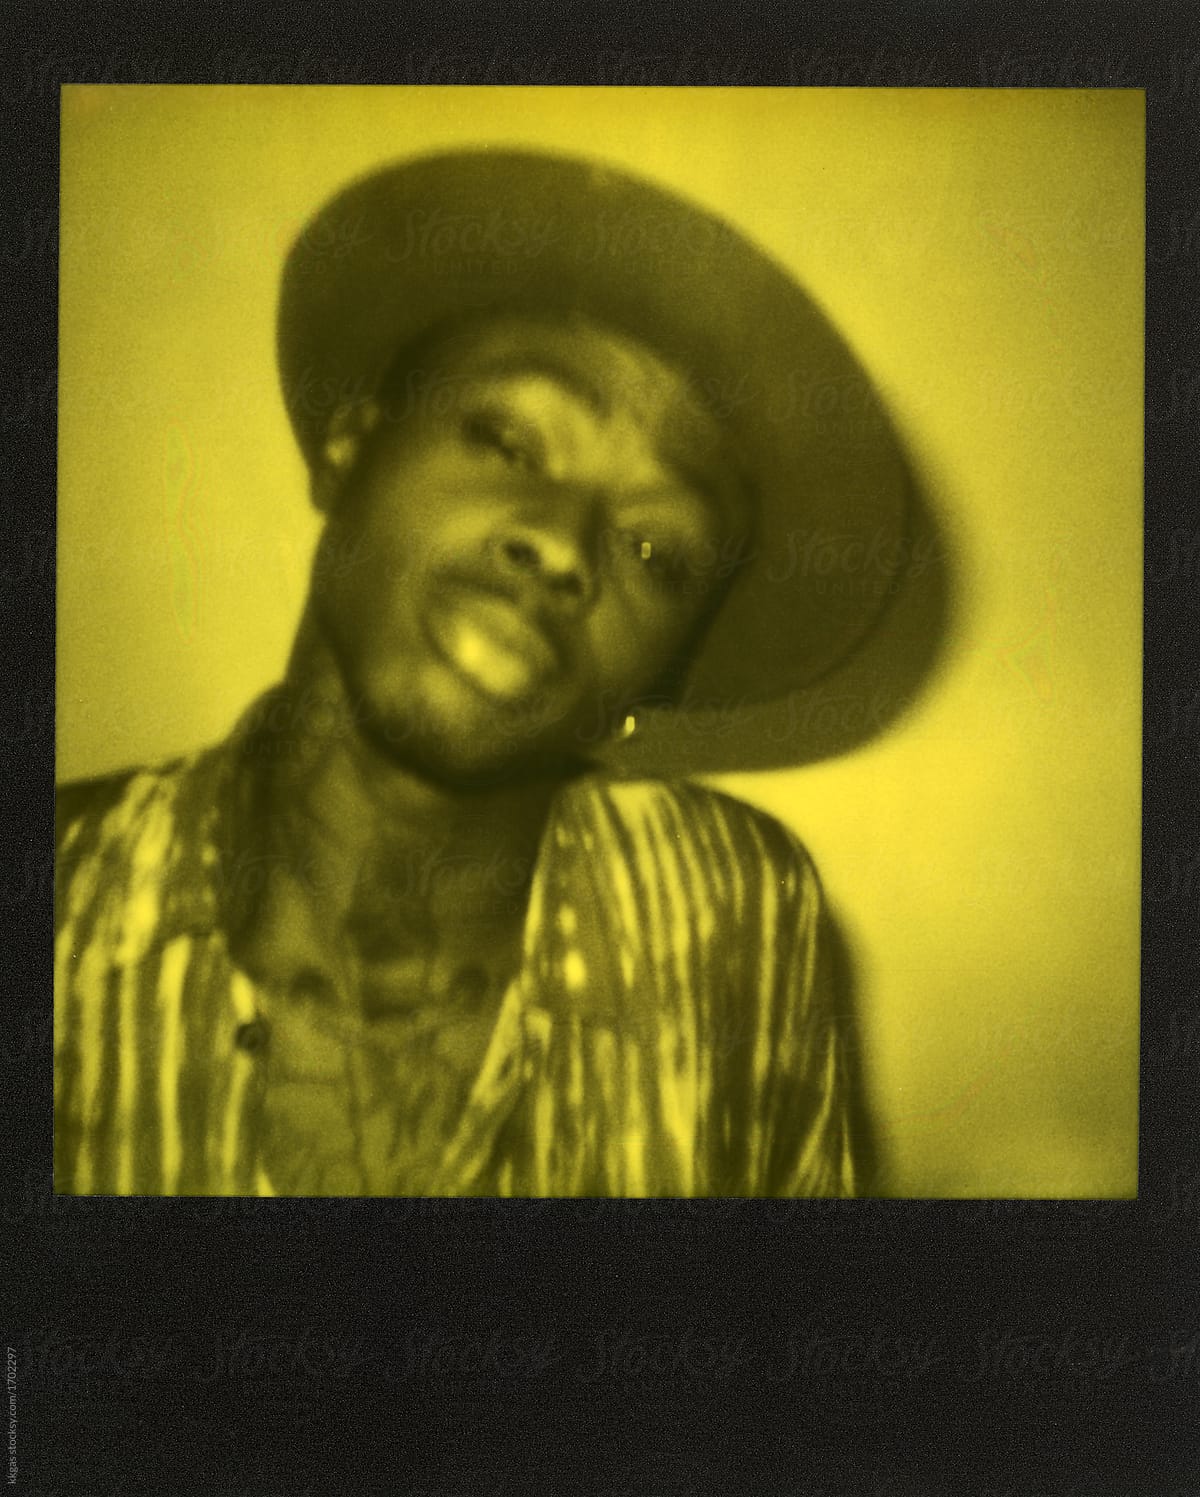 Yellow duochrome polaroid scan of a cool tattooed black man